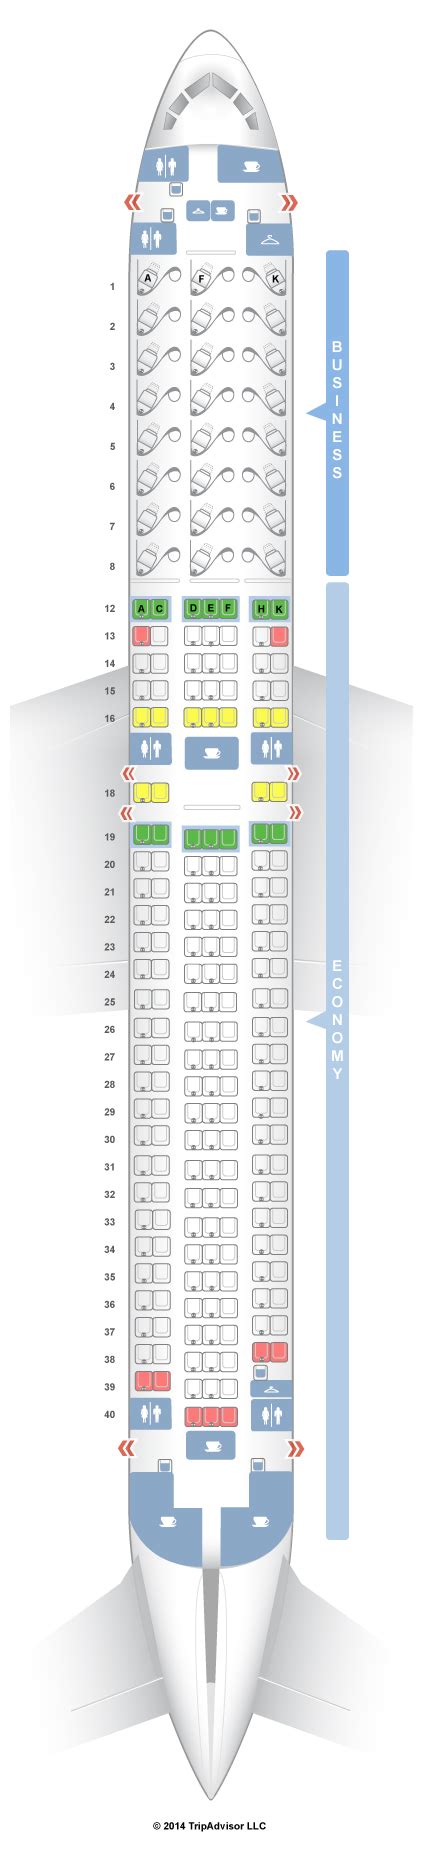 Seatguru Seat Map Air Canada Boeing 767 300er 763 V1 Seatguru